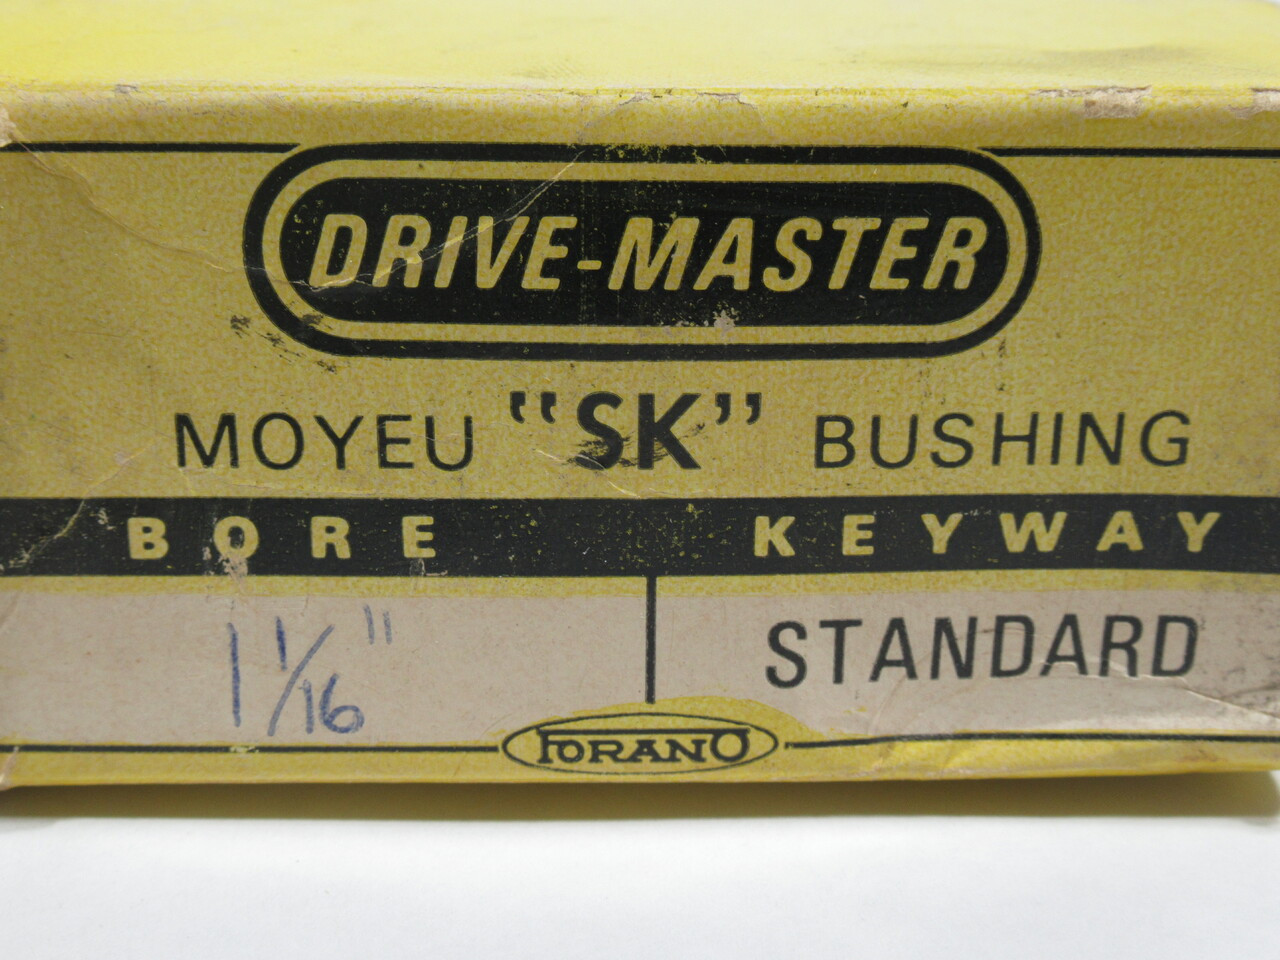 Drive-Master SK-1-1/16 Bushing 1-1/16" Bore 2-13/16" OD *DAMAGED BOX* NEW